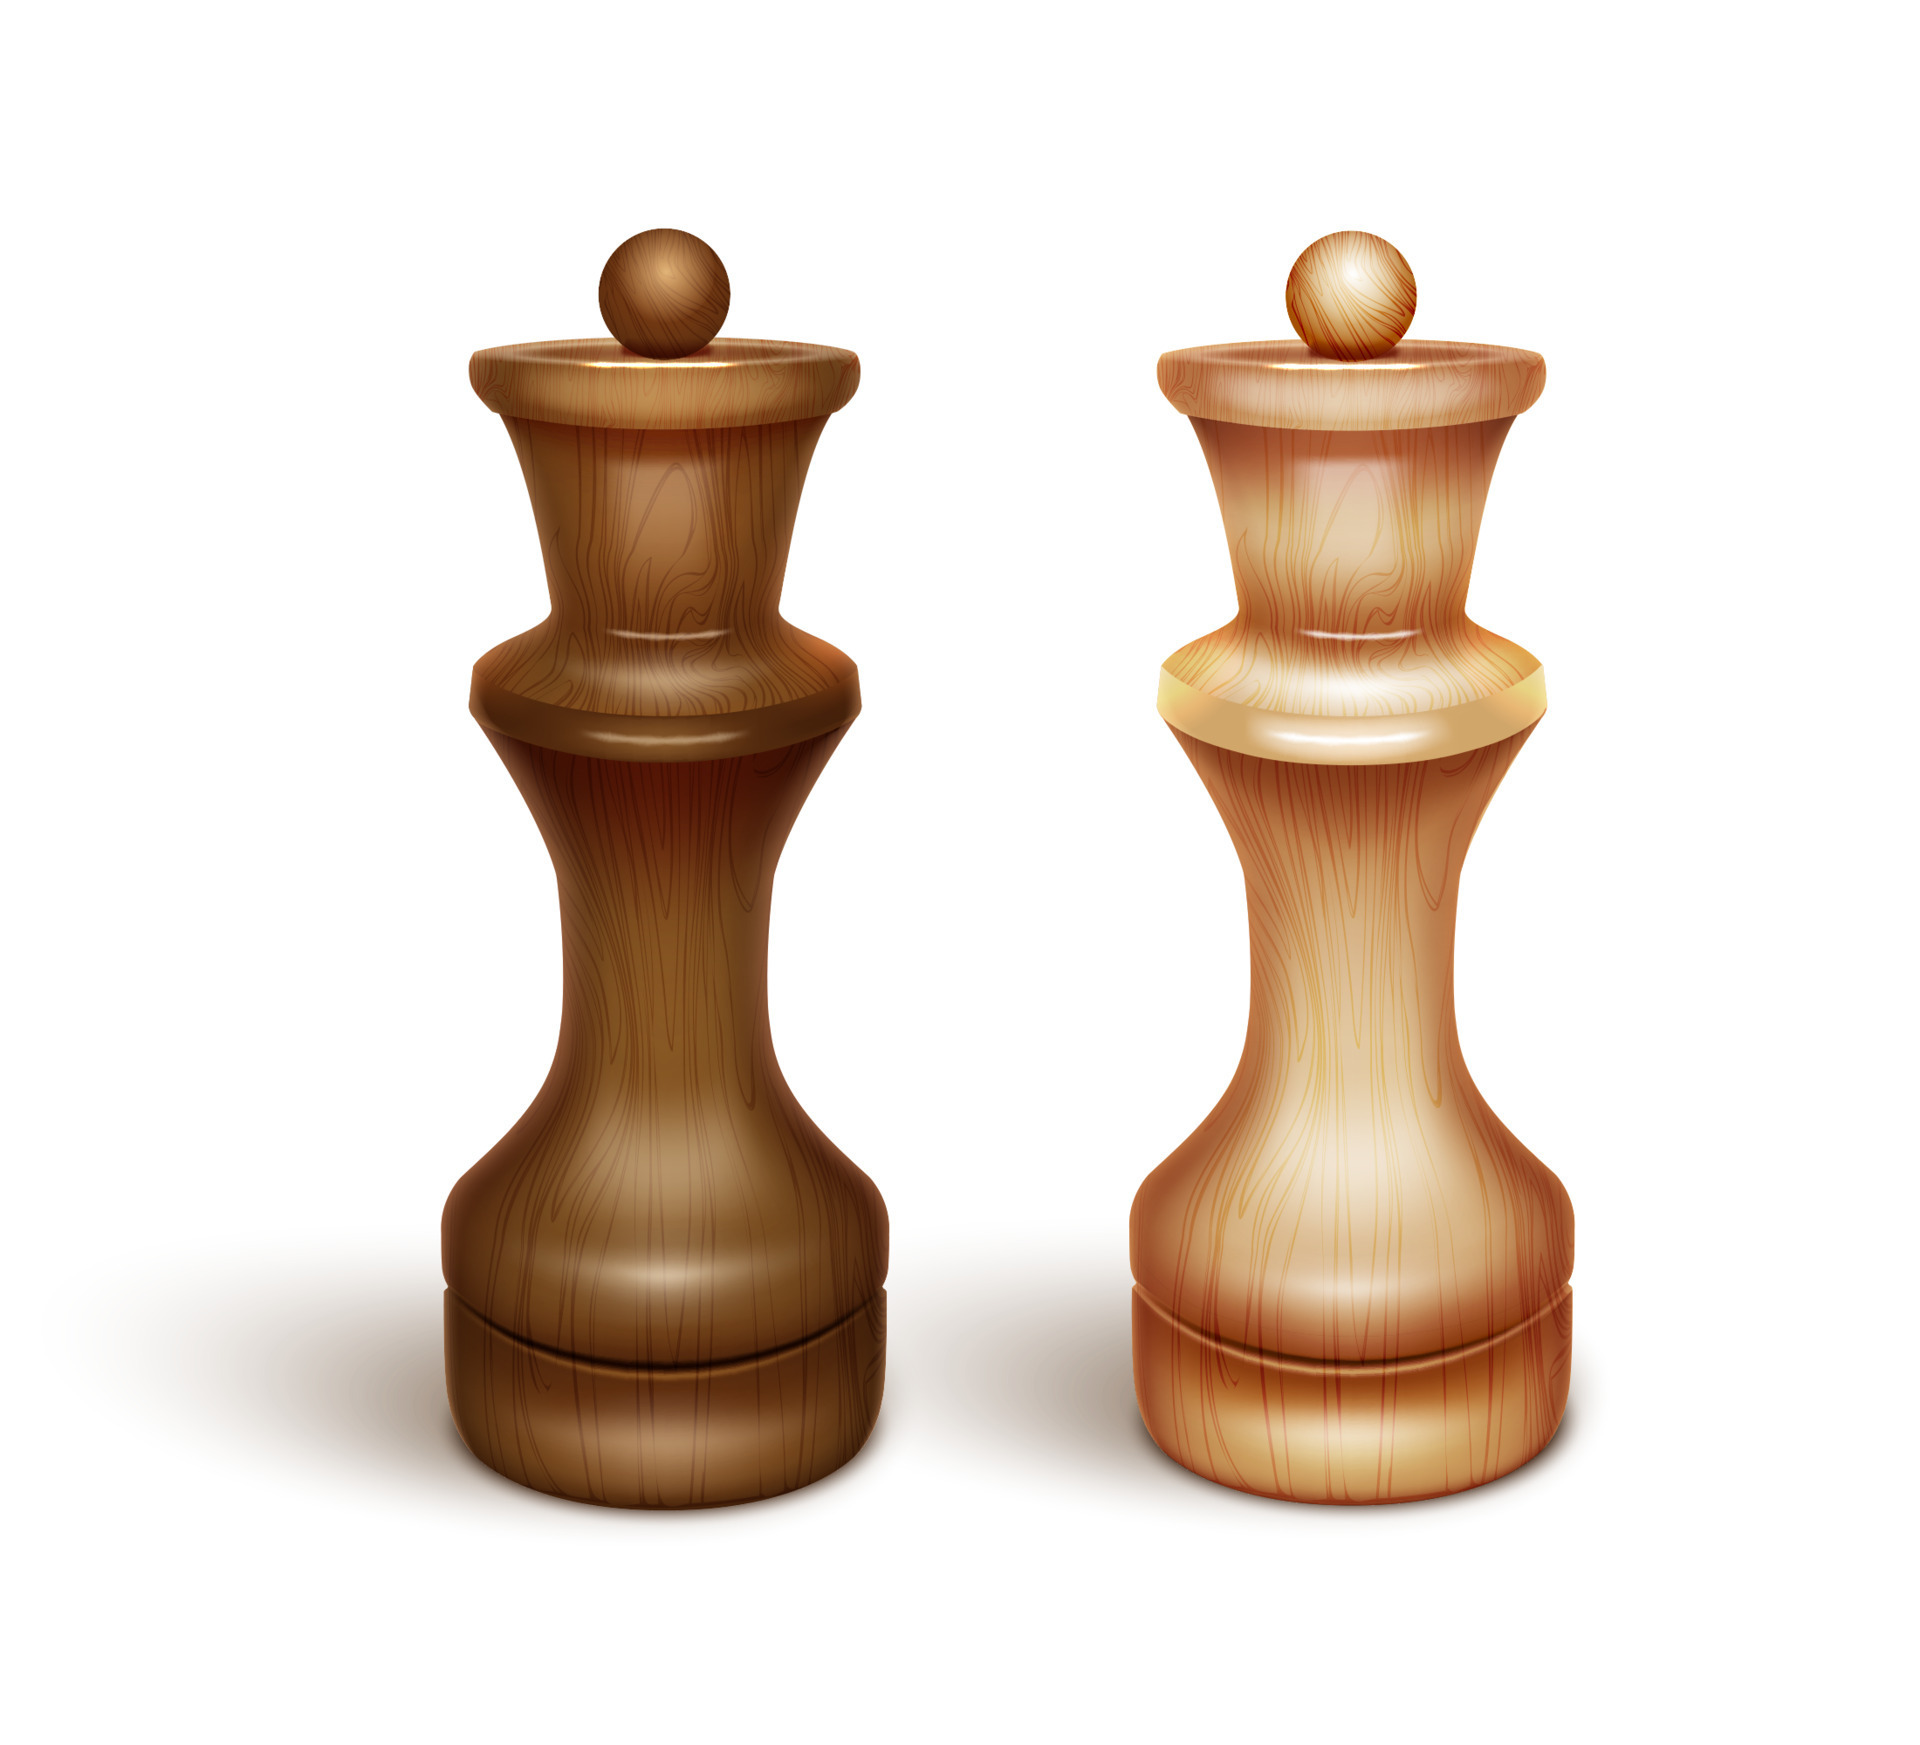 Vetor de torre preta de xadrez 3d realista